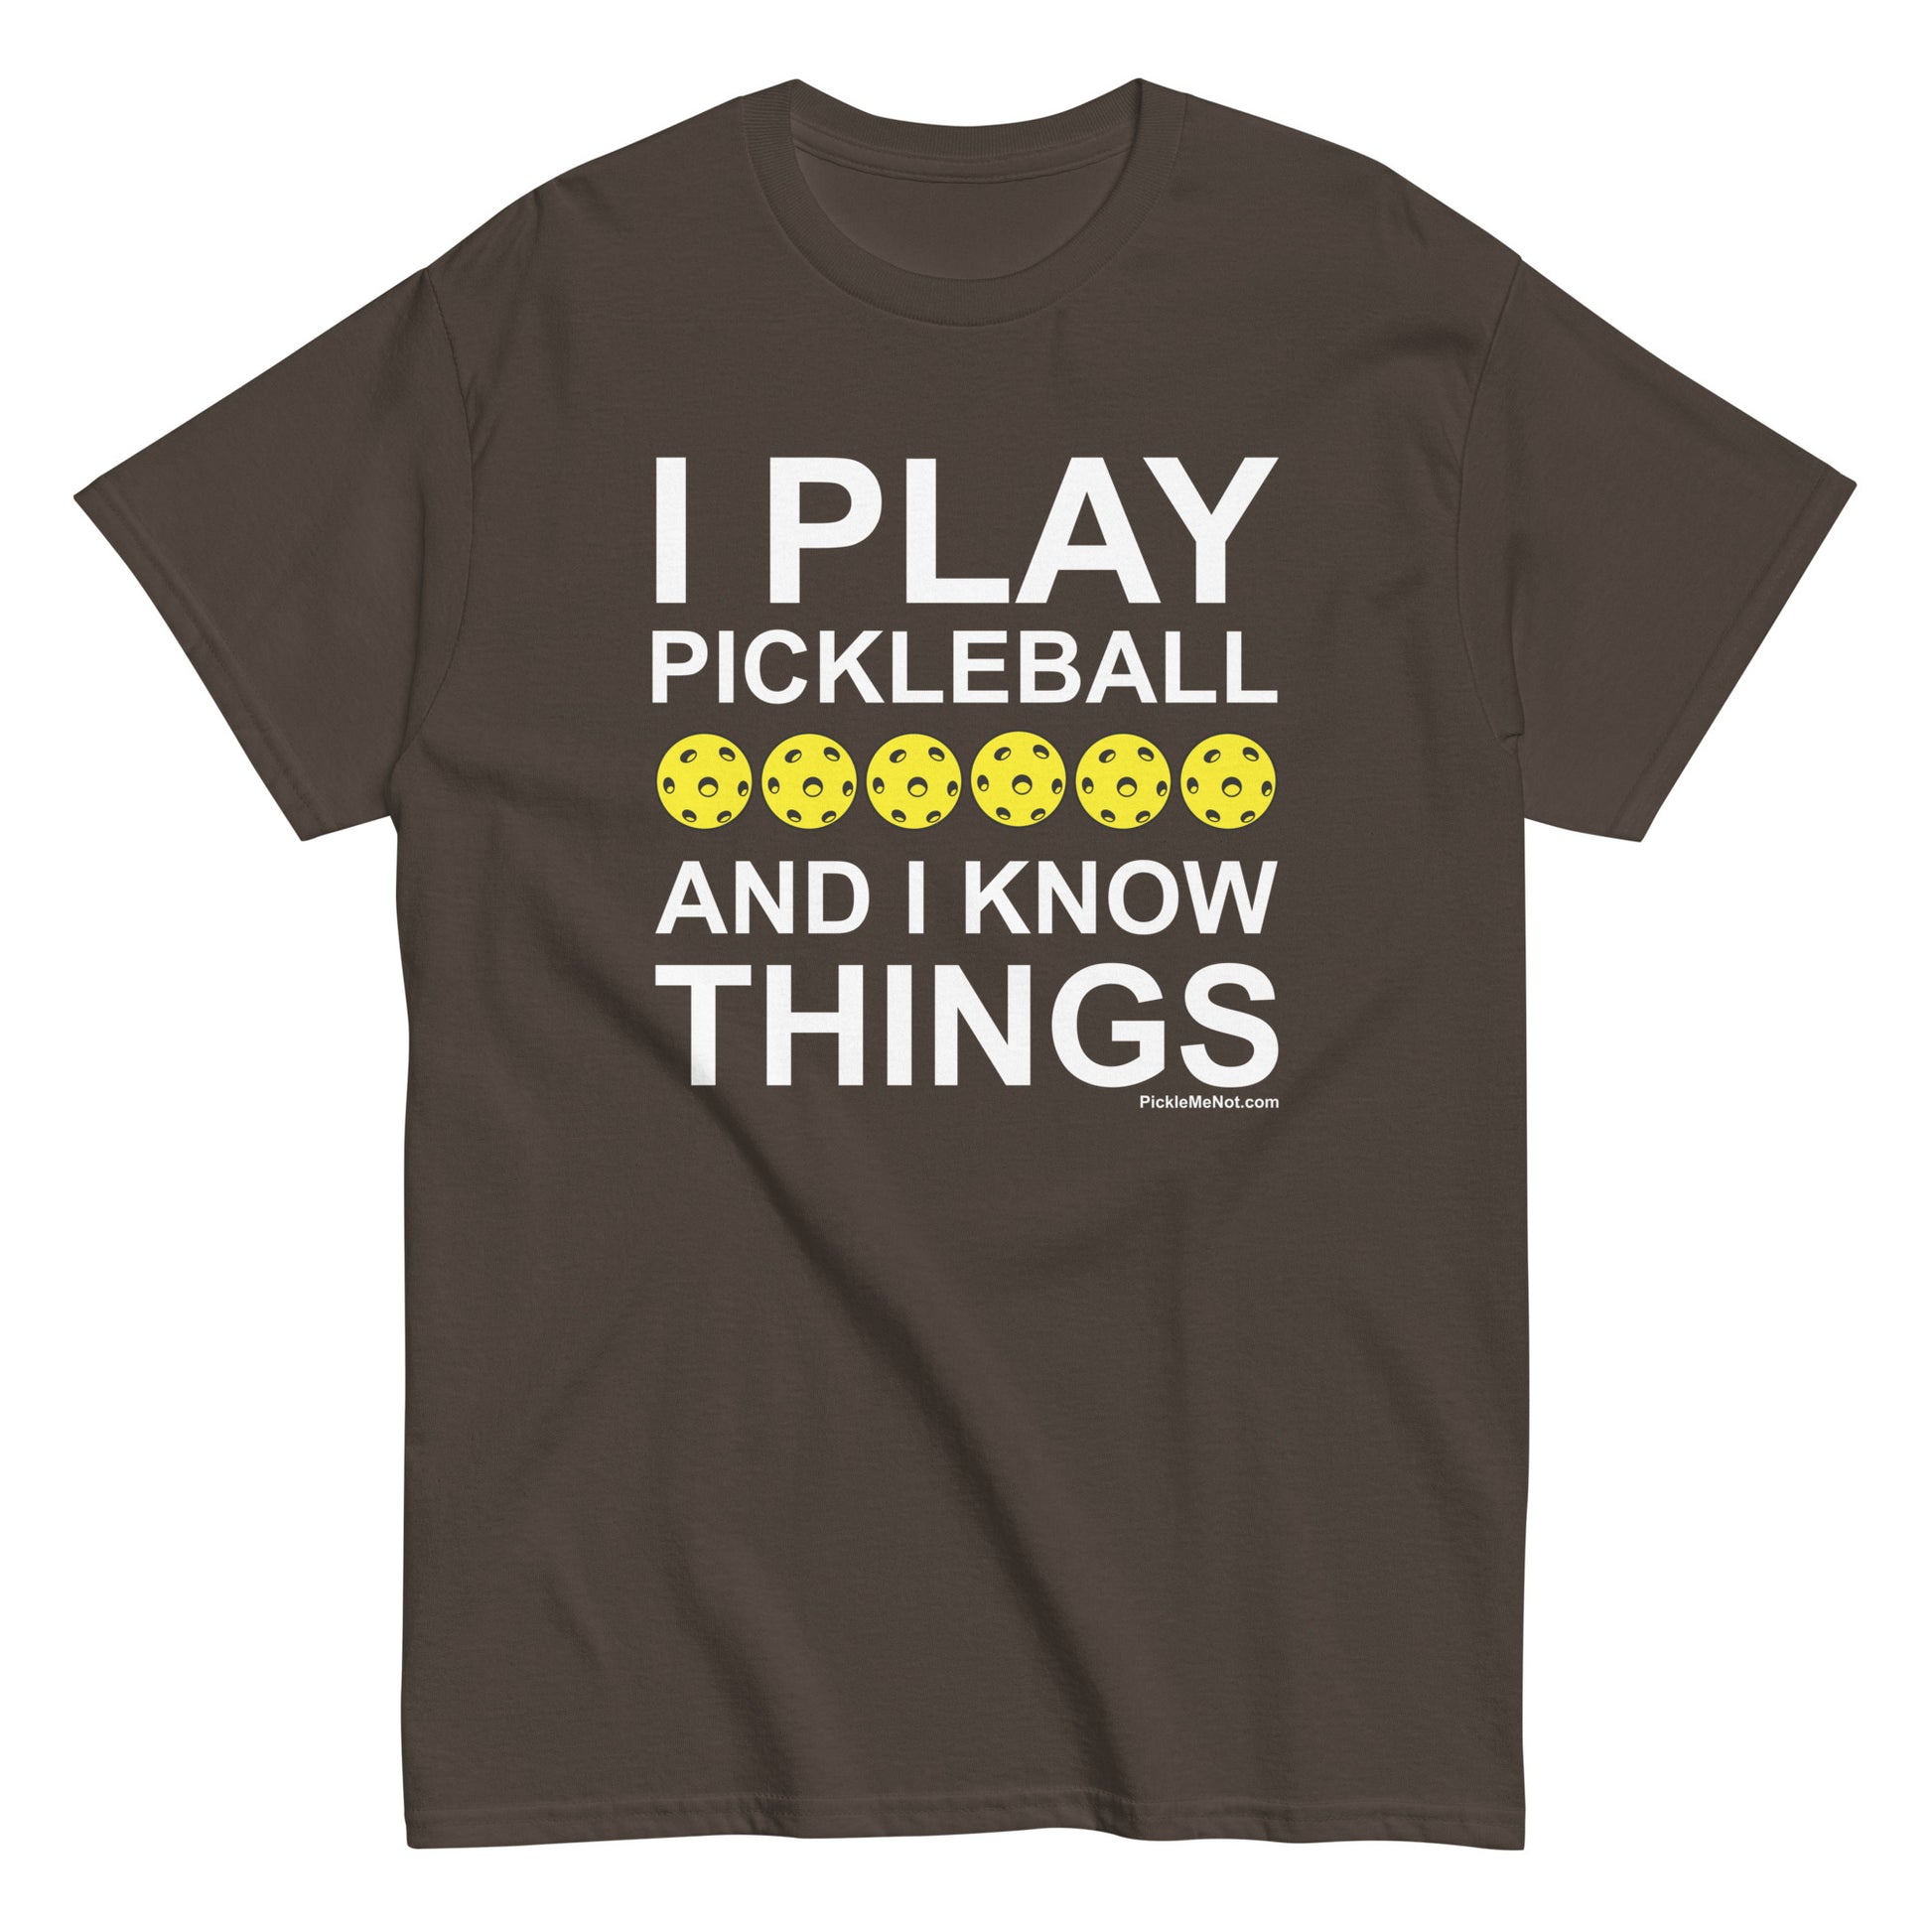 Fun Pickleball, "I Play Pickleball And I Know Things" Men's Classic Dark Chocolate Tee